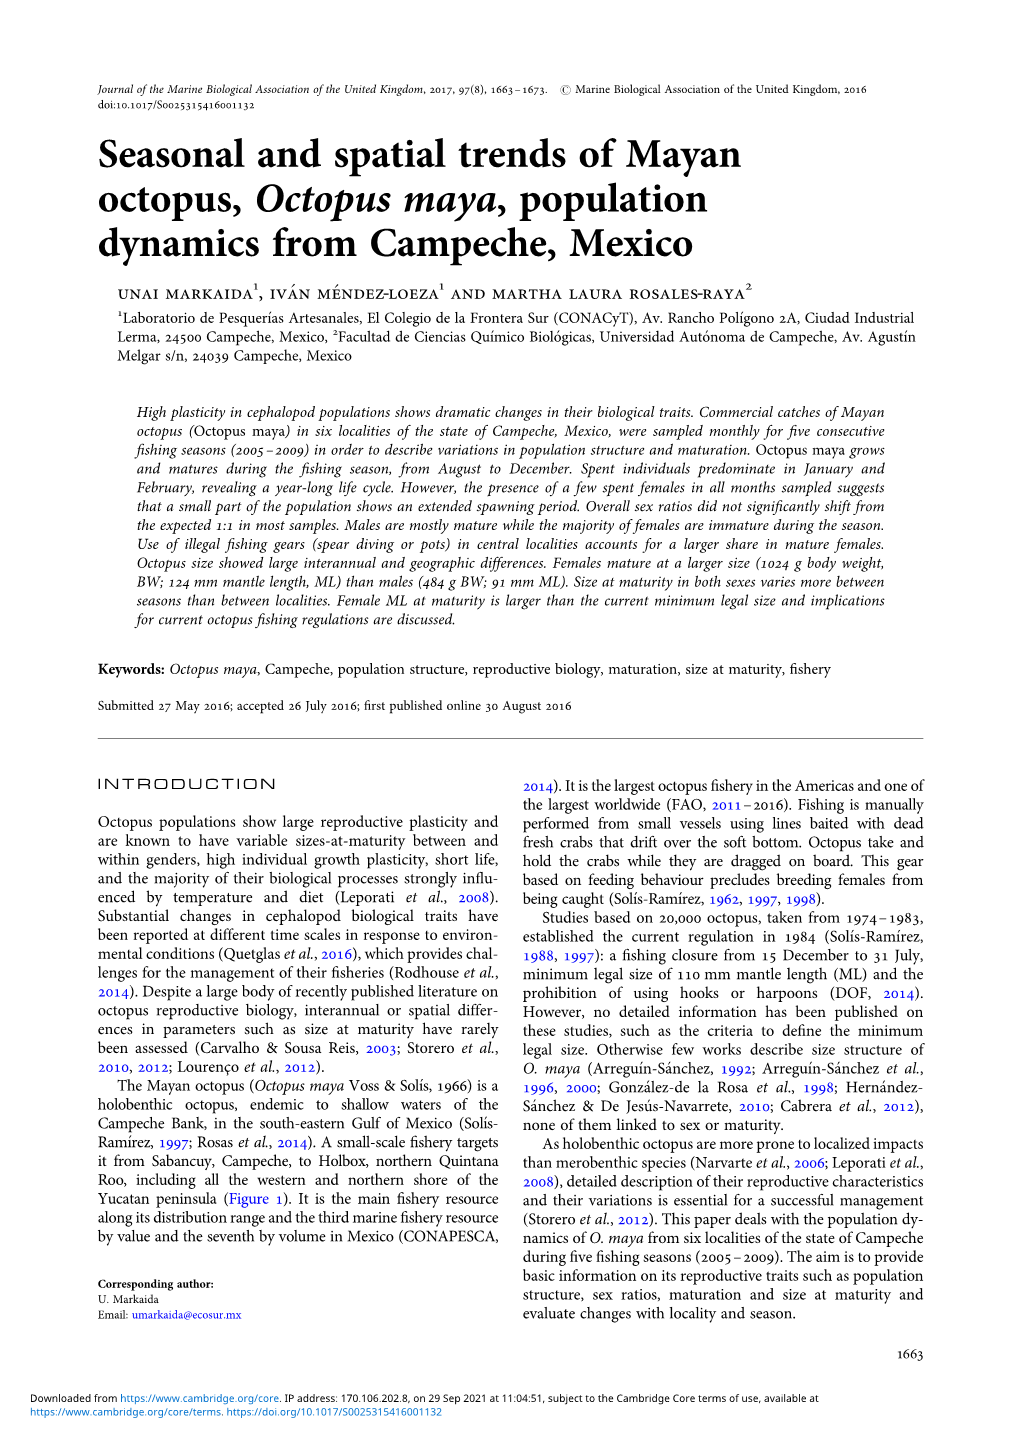 Seasonal and Spatial Trends of Mayan Octopus, Octopus Maya, Population